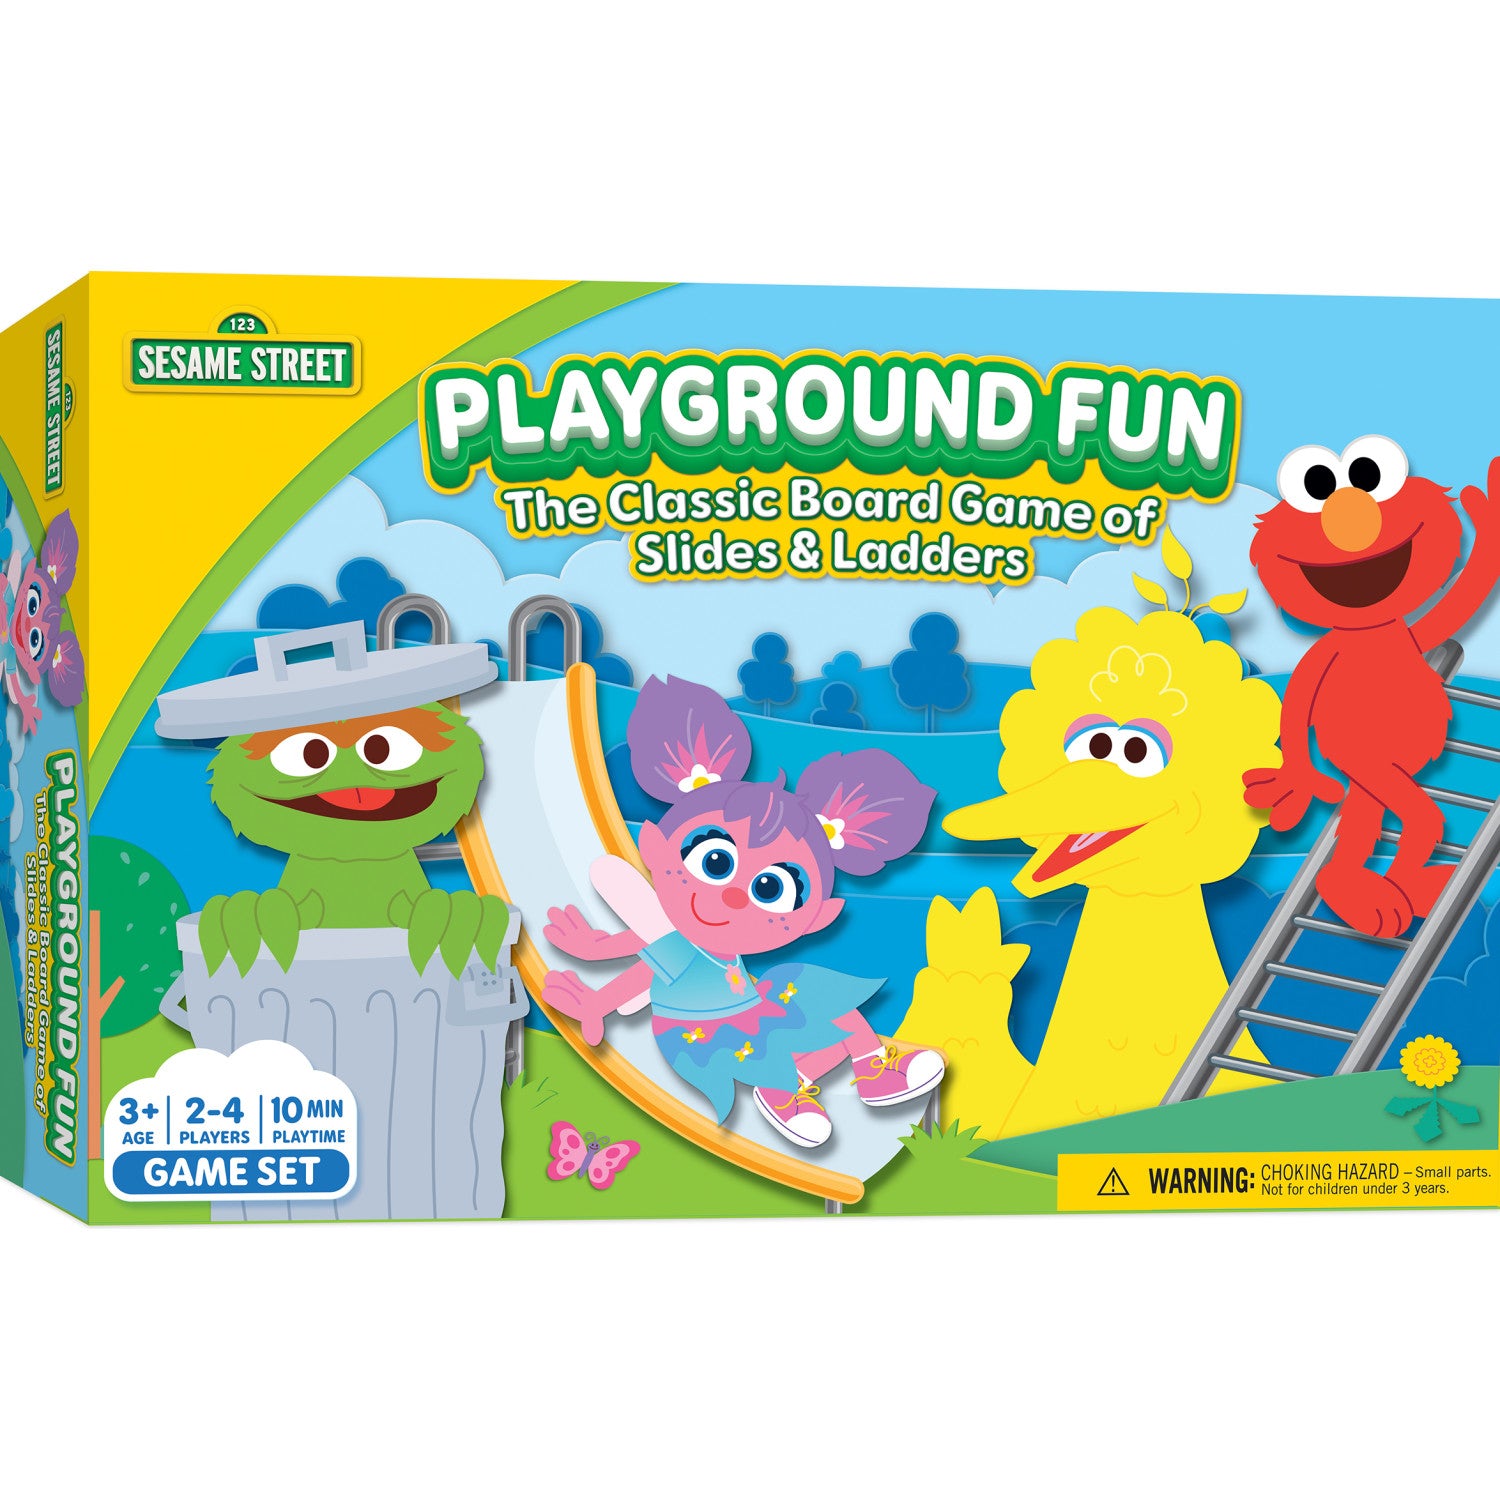 Sesame Street Playground Fun - Slides & Ladders Board Game